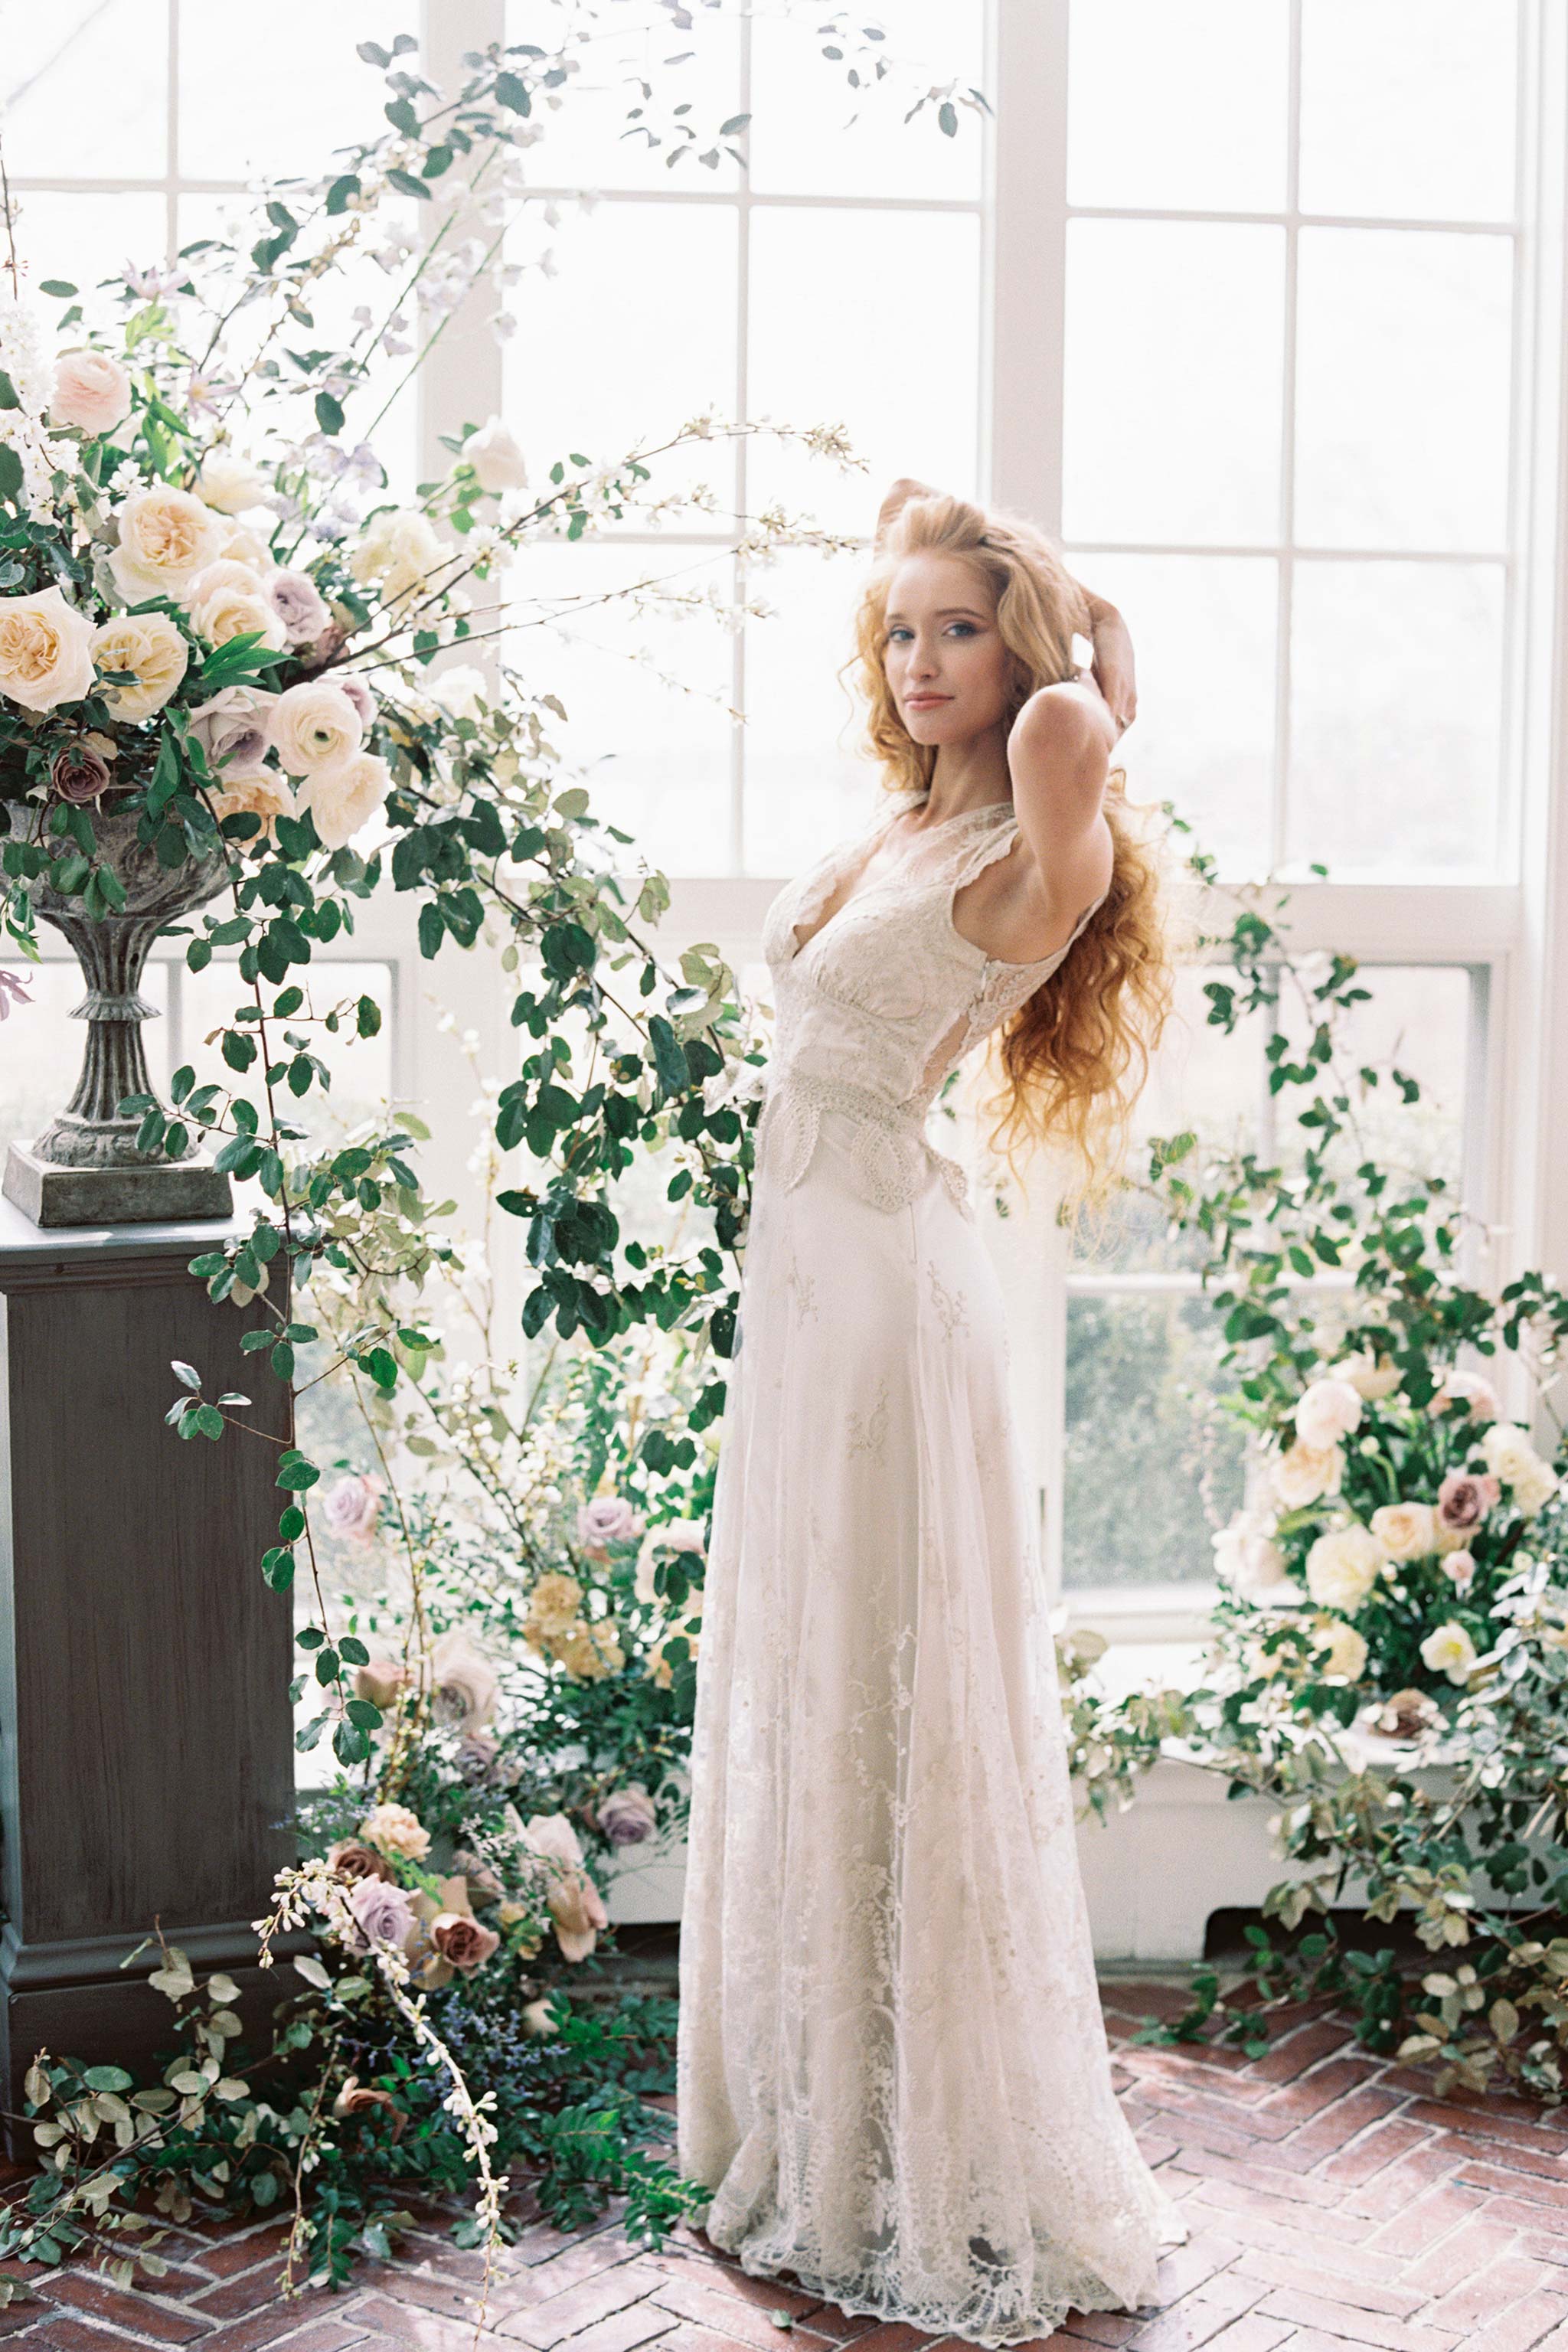 Timeless Wedding Dresses: 'Romantique' by Claire Pettibone